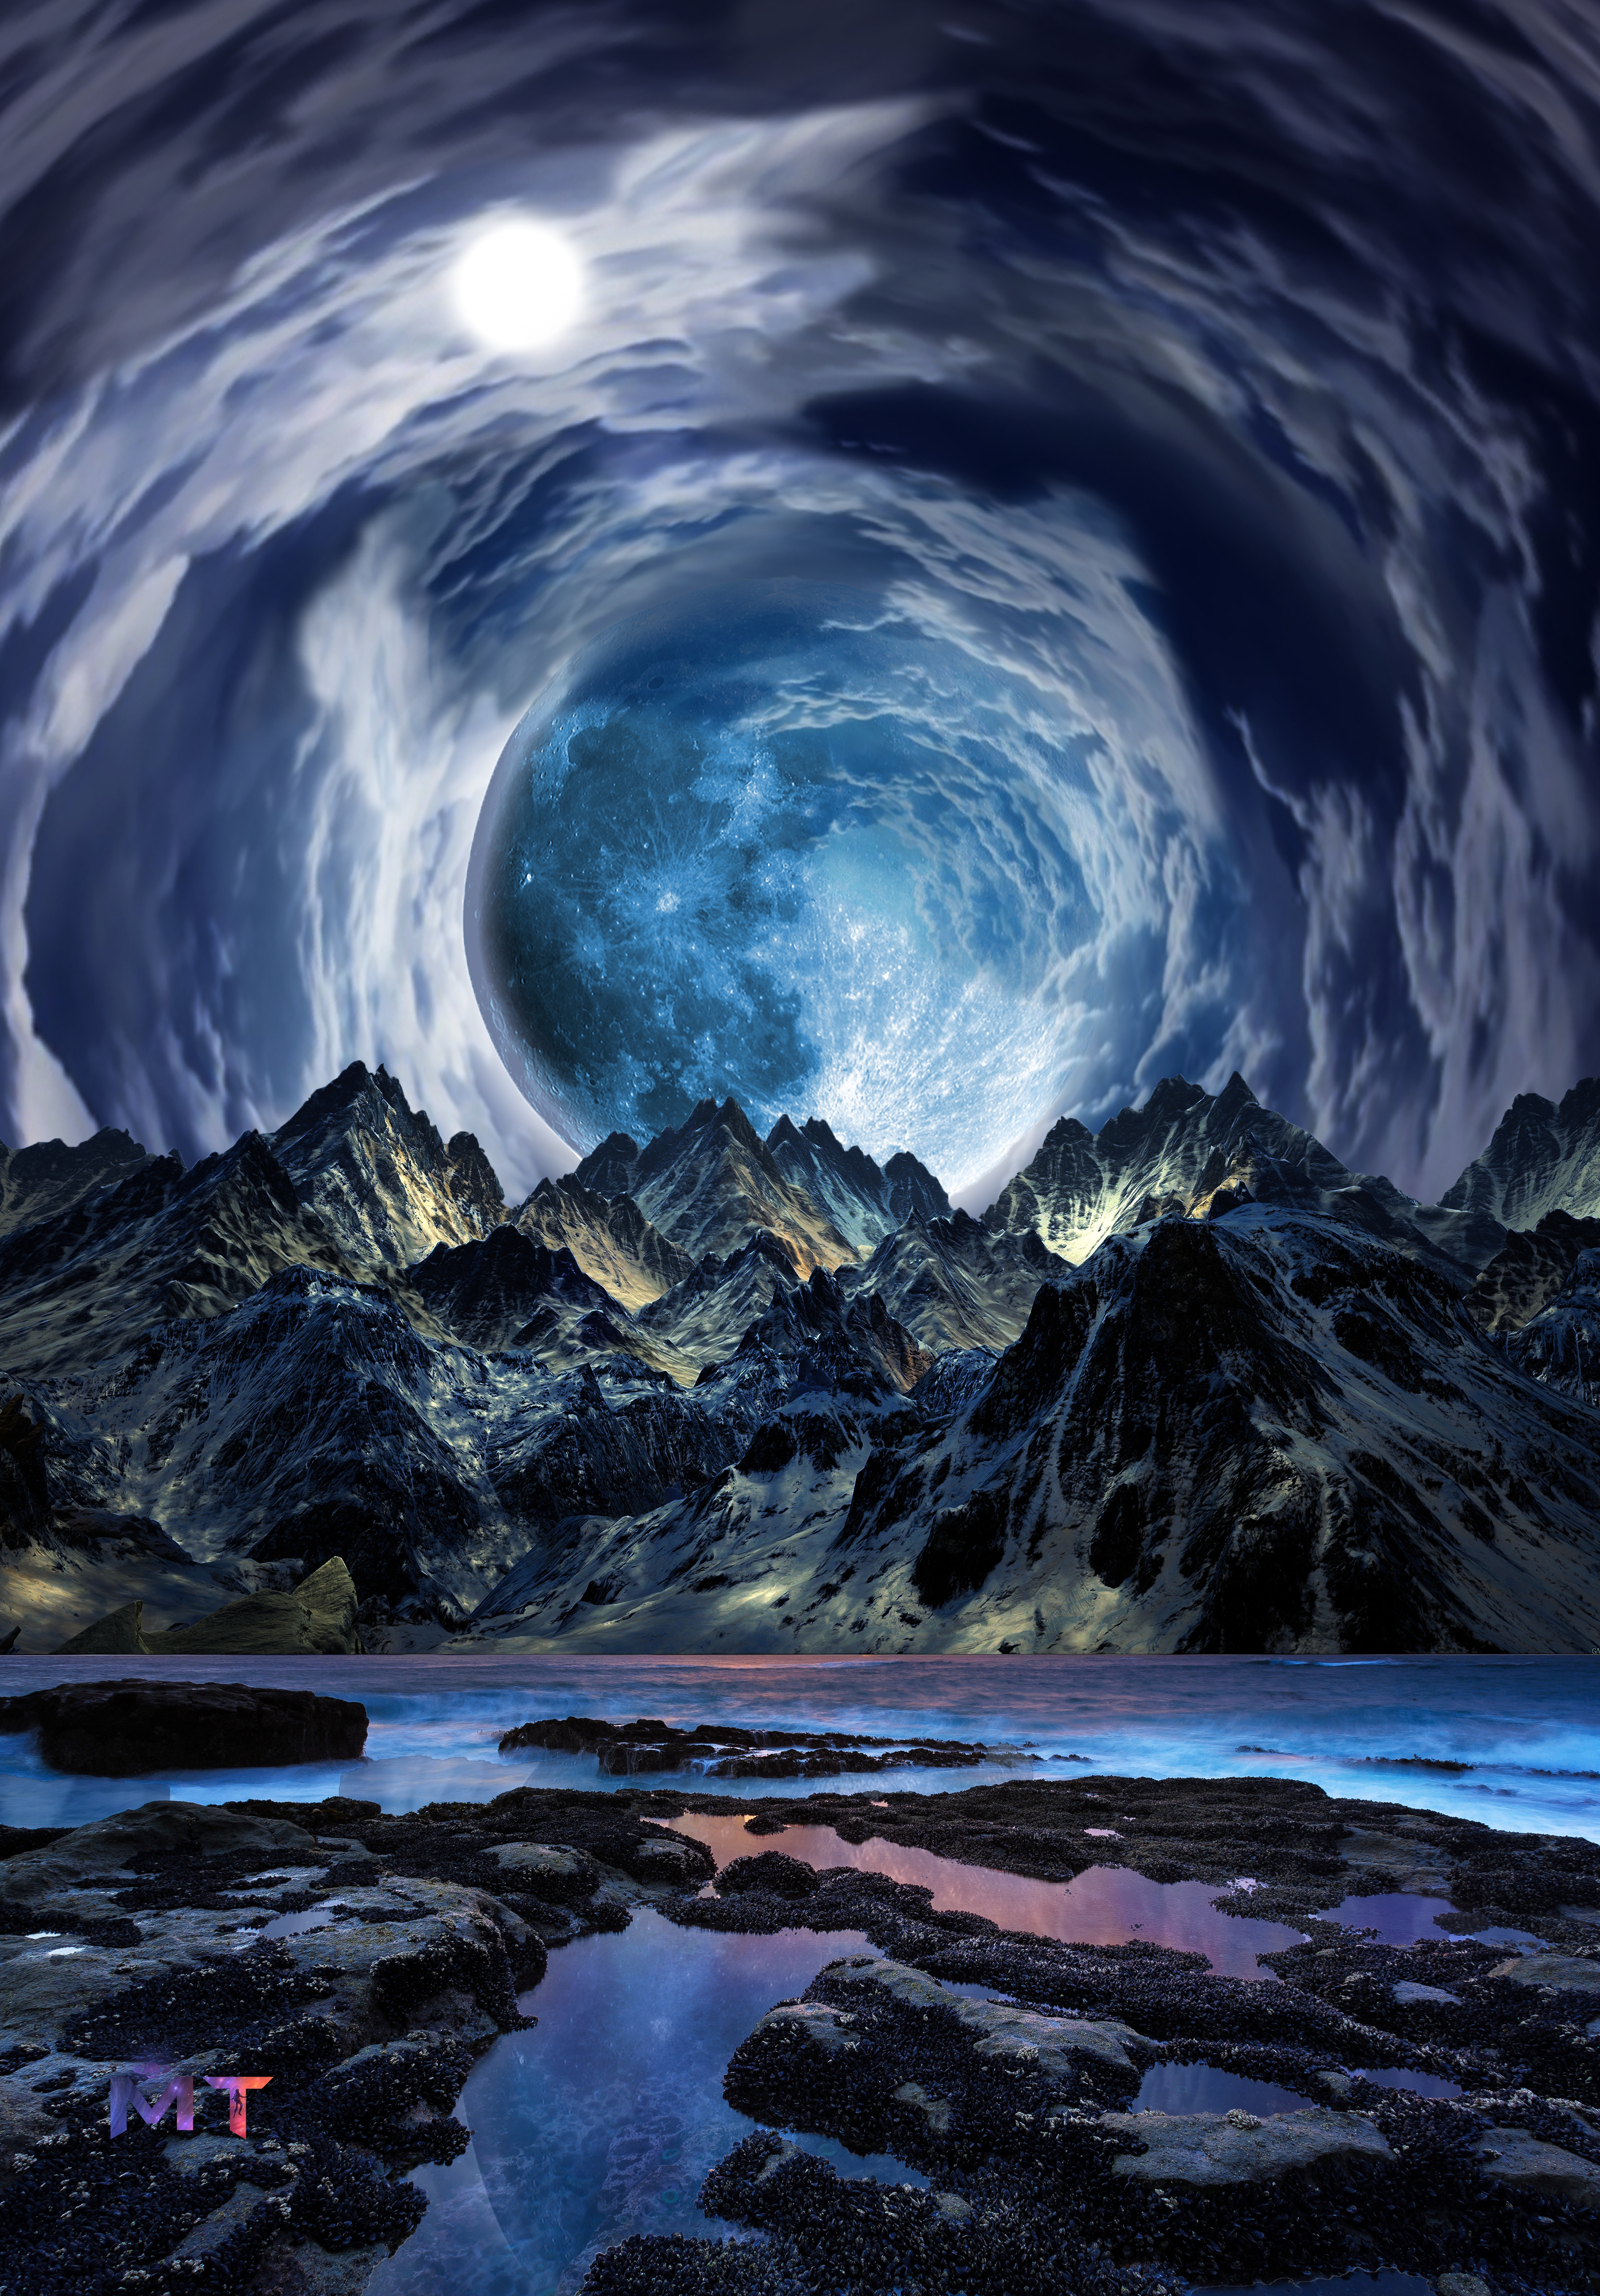 HD wallpaper, Surreal, Mountains, Moon, Clouds, Landscape, Portal